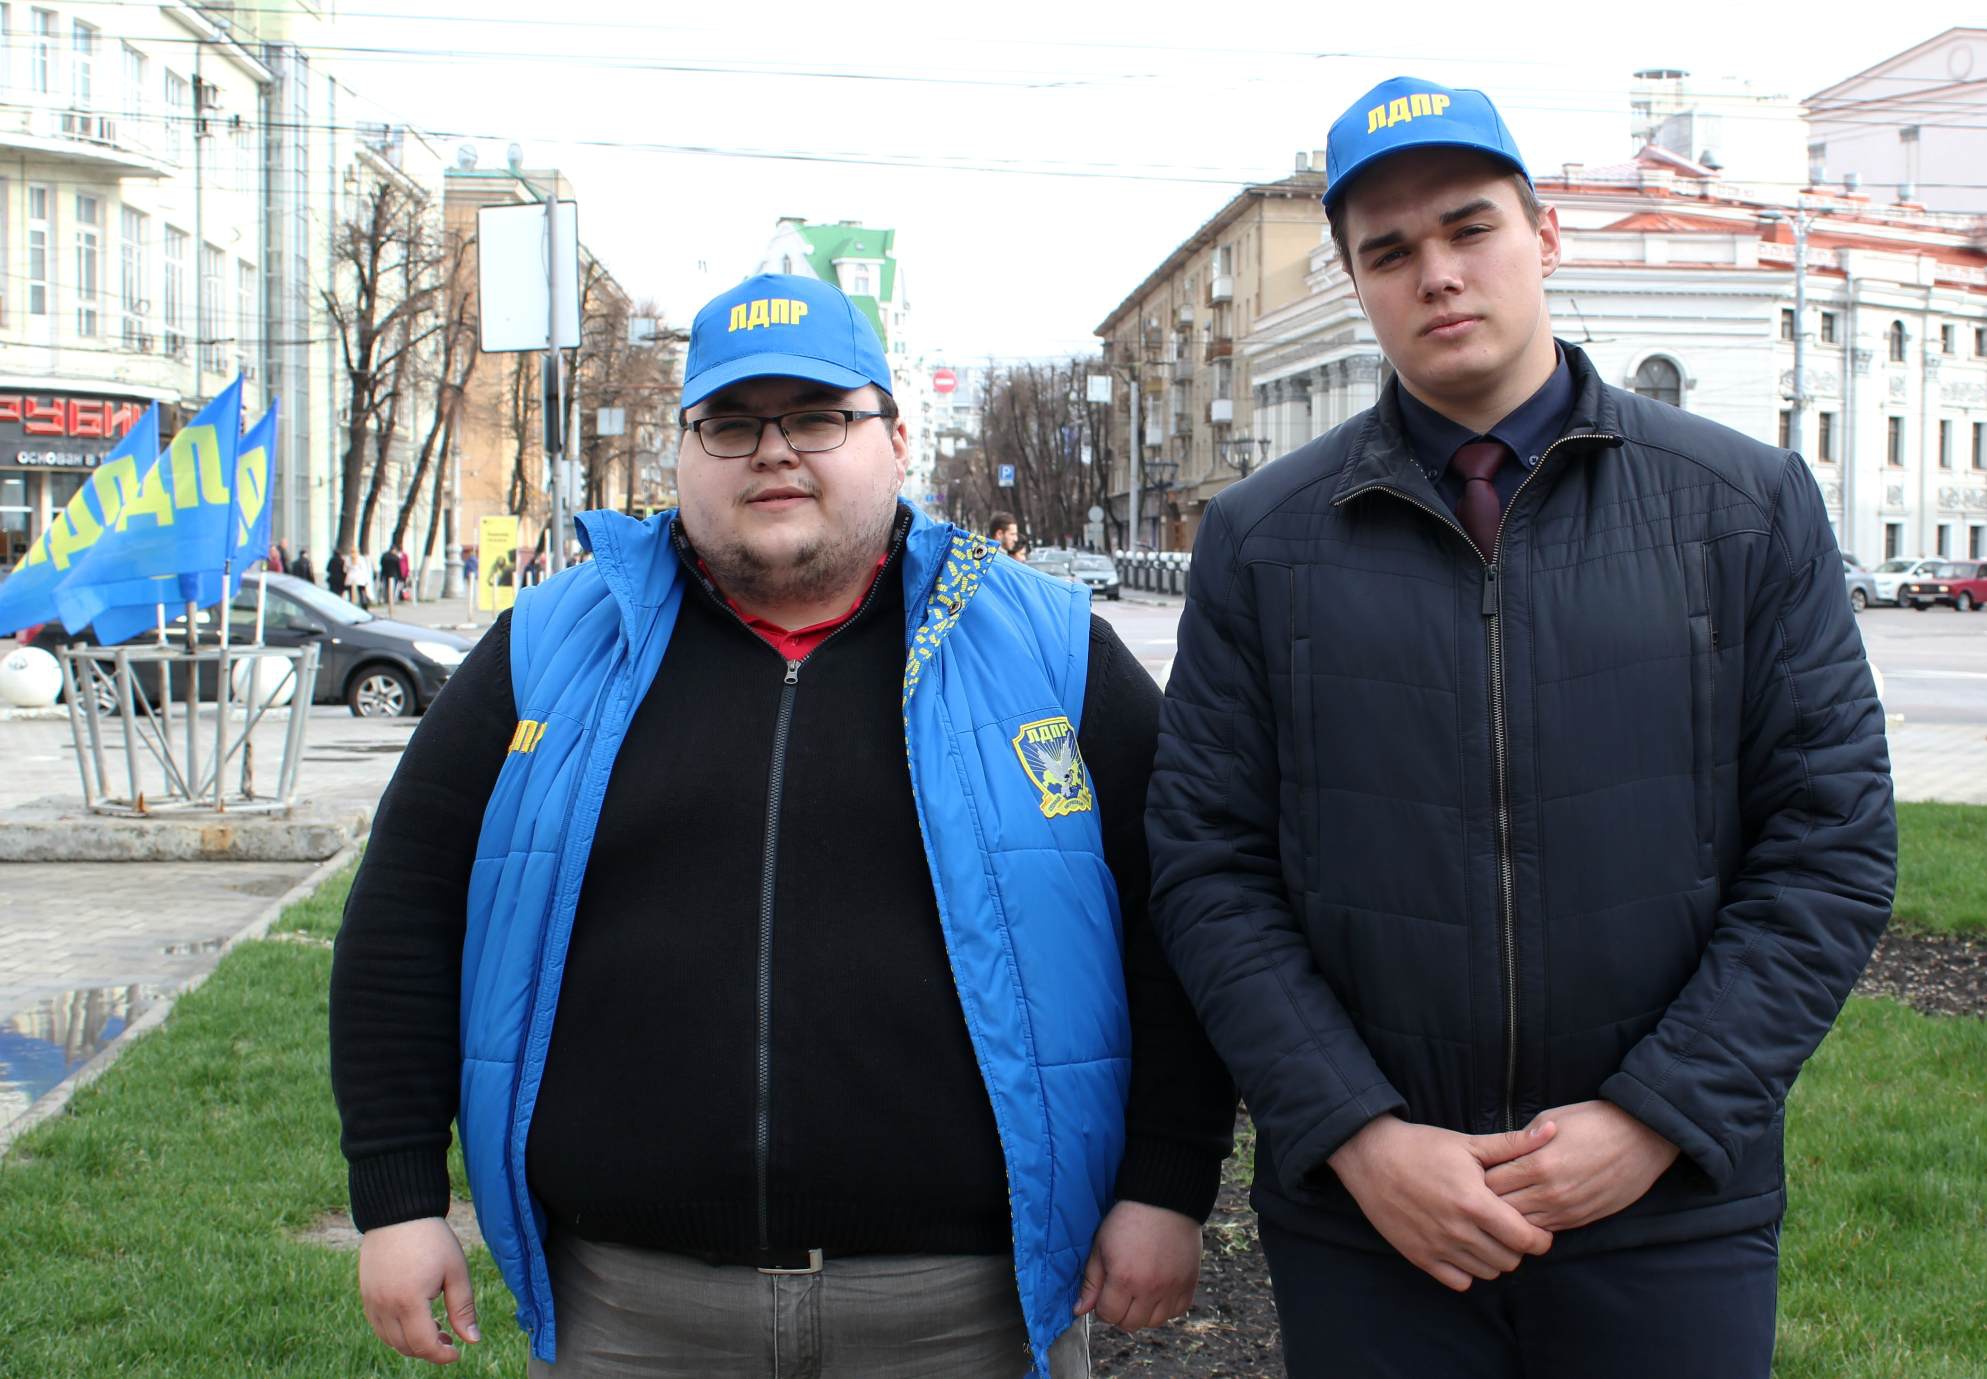 Слева - Александр Баймурзаев, справа - Родион Родионов.